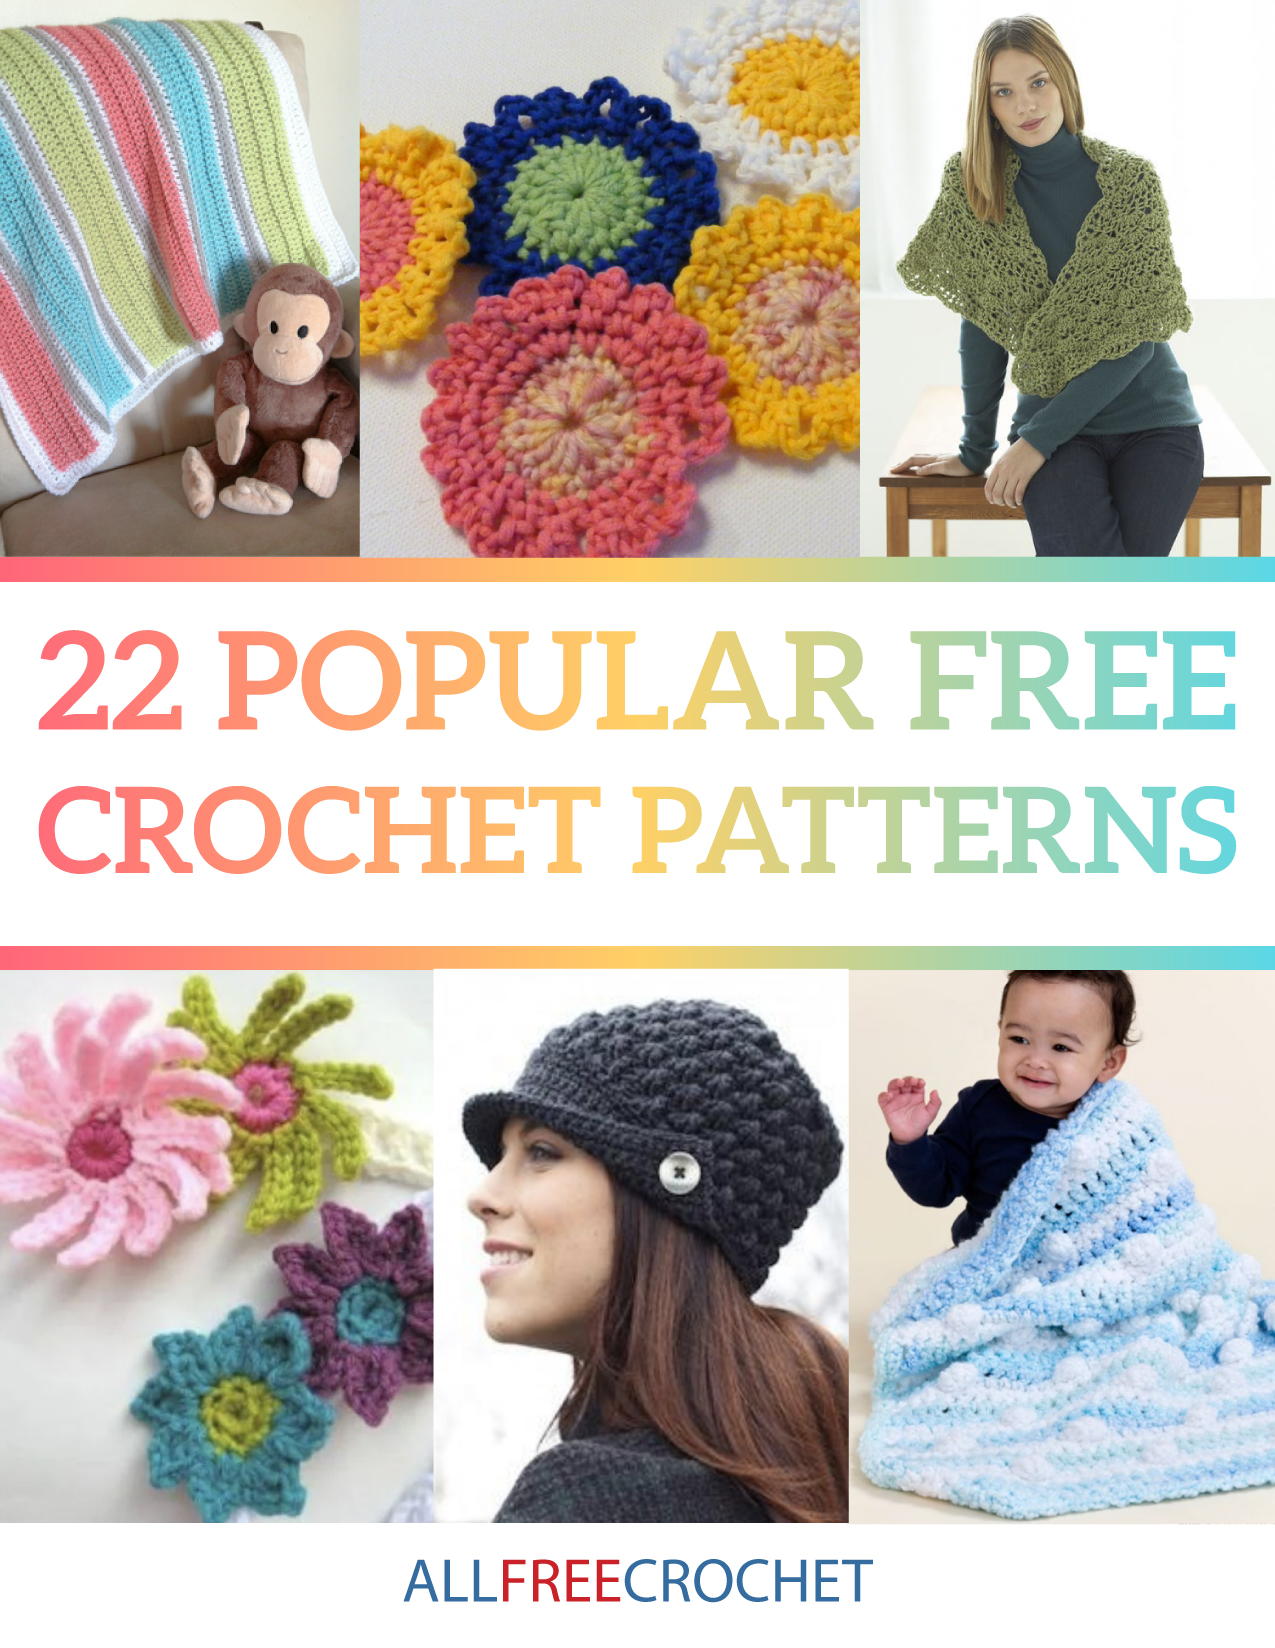 Free download crochet patterns pdf cross stitch free patterns download